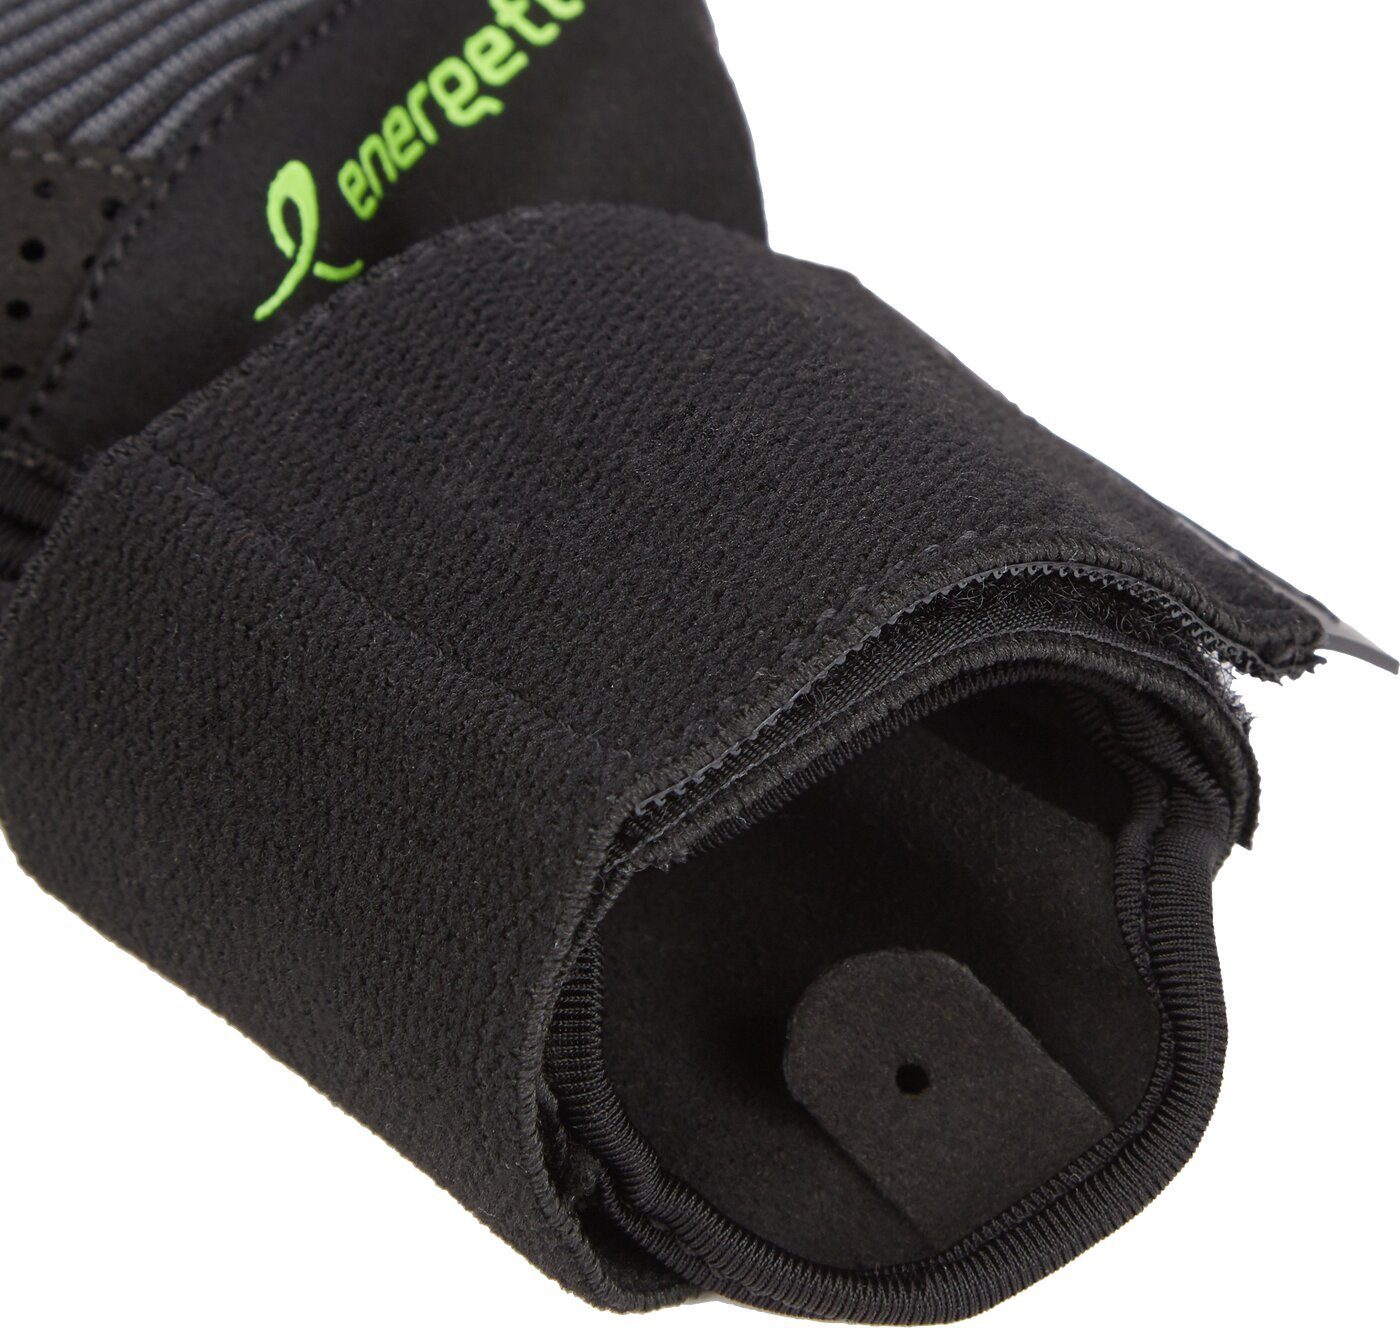 Energetics Gewichtshandschuhe Handschuh MFG550 BLACK/YELLOW